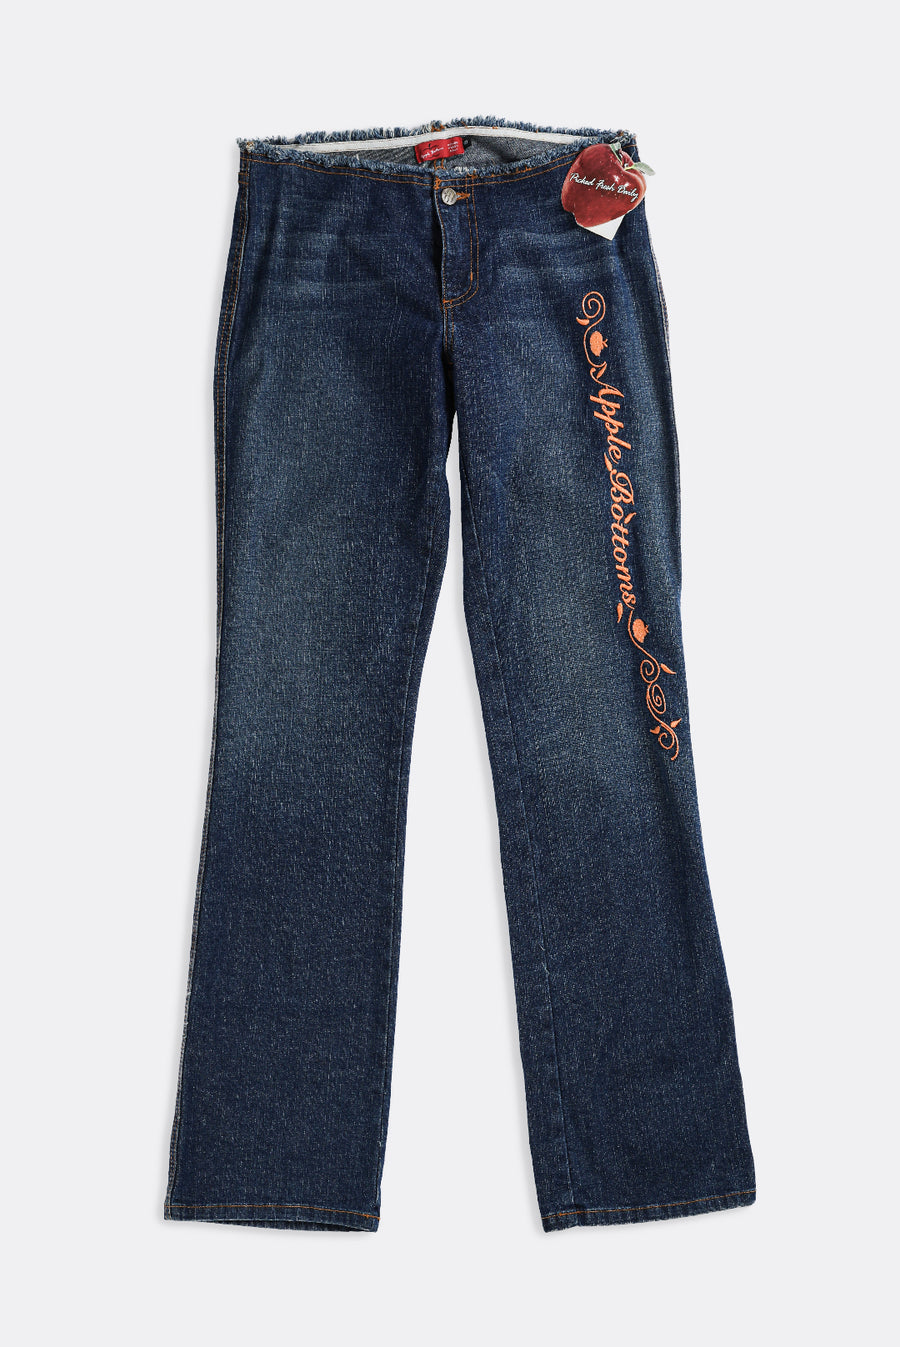 Deadstock Apple Bottom Orange Embroidered Denim Pants - W31